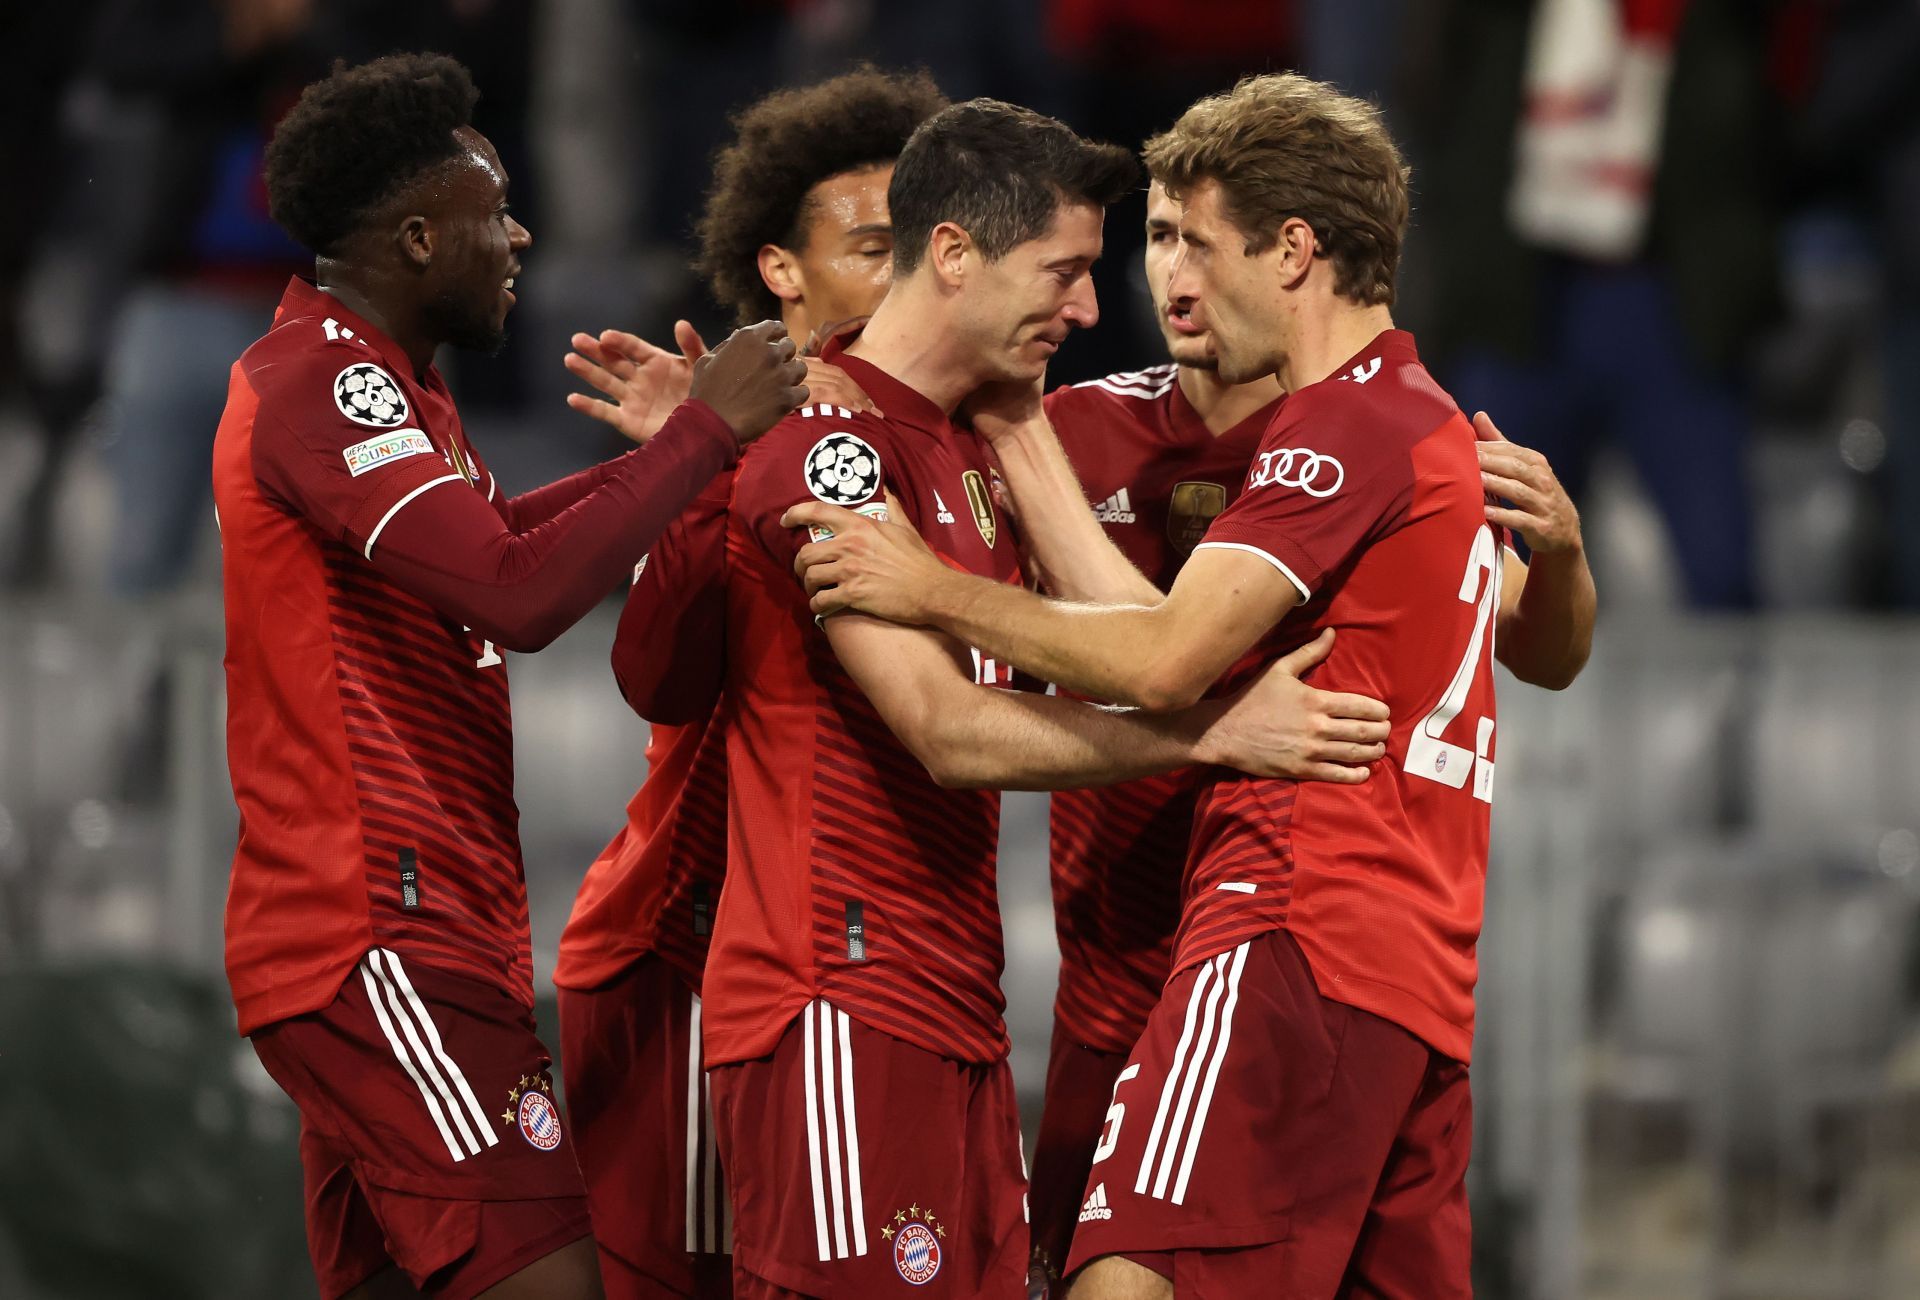 Bayern Munich averages 3.43 goals per game